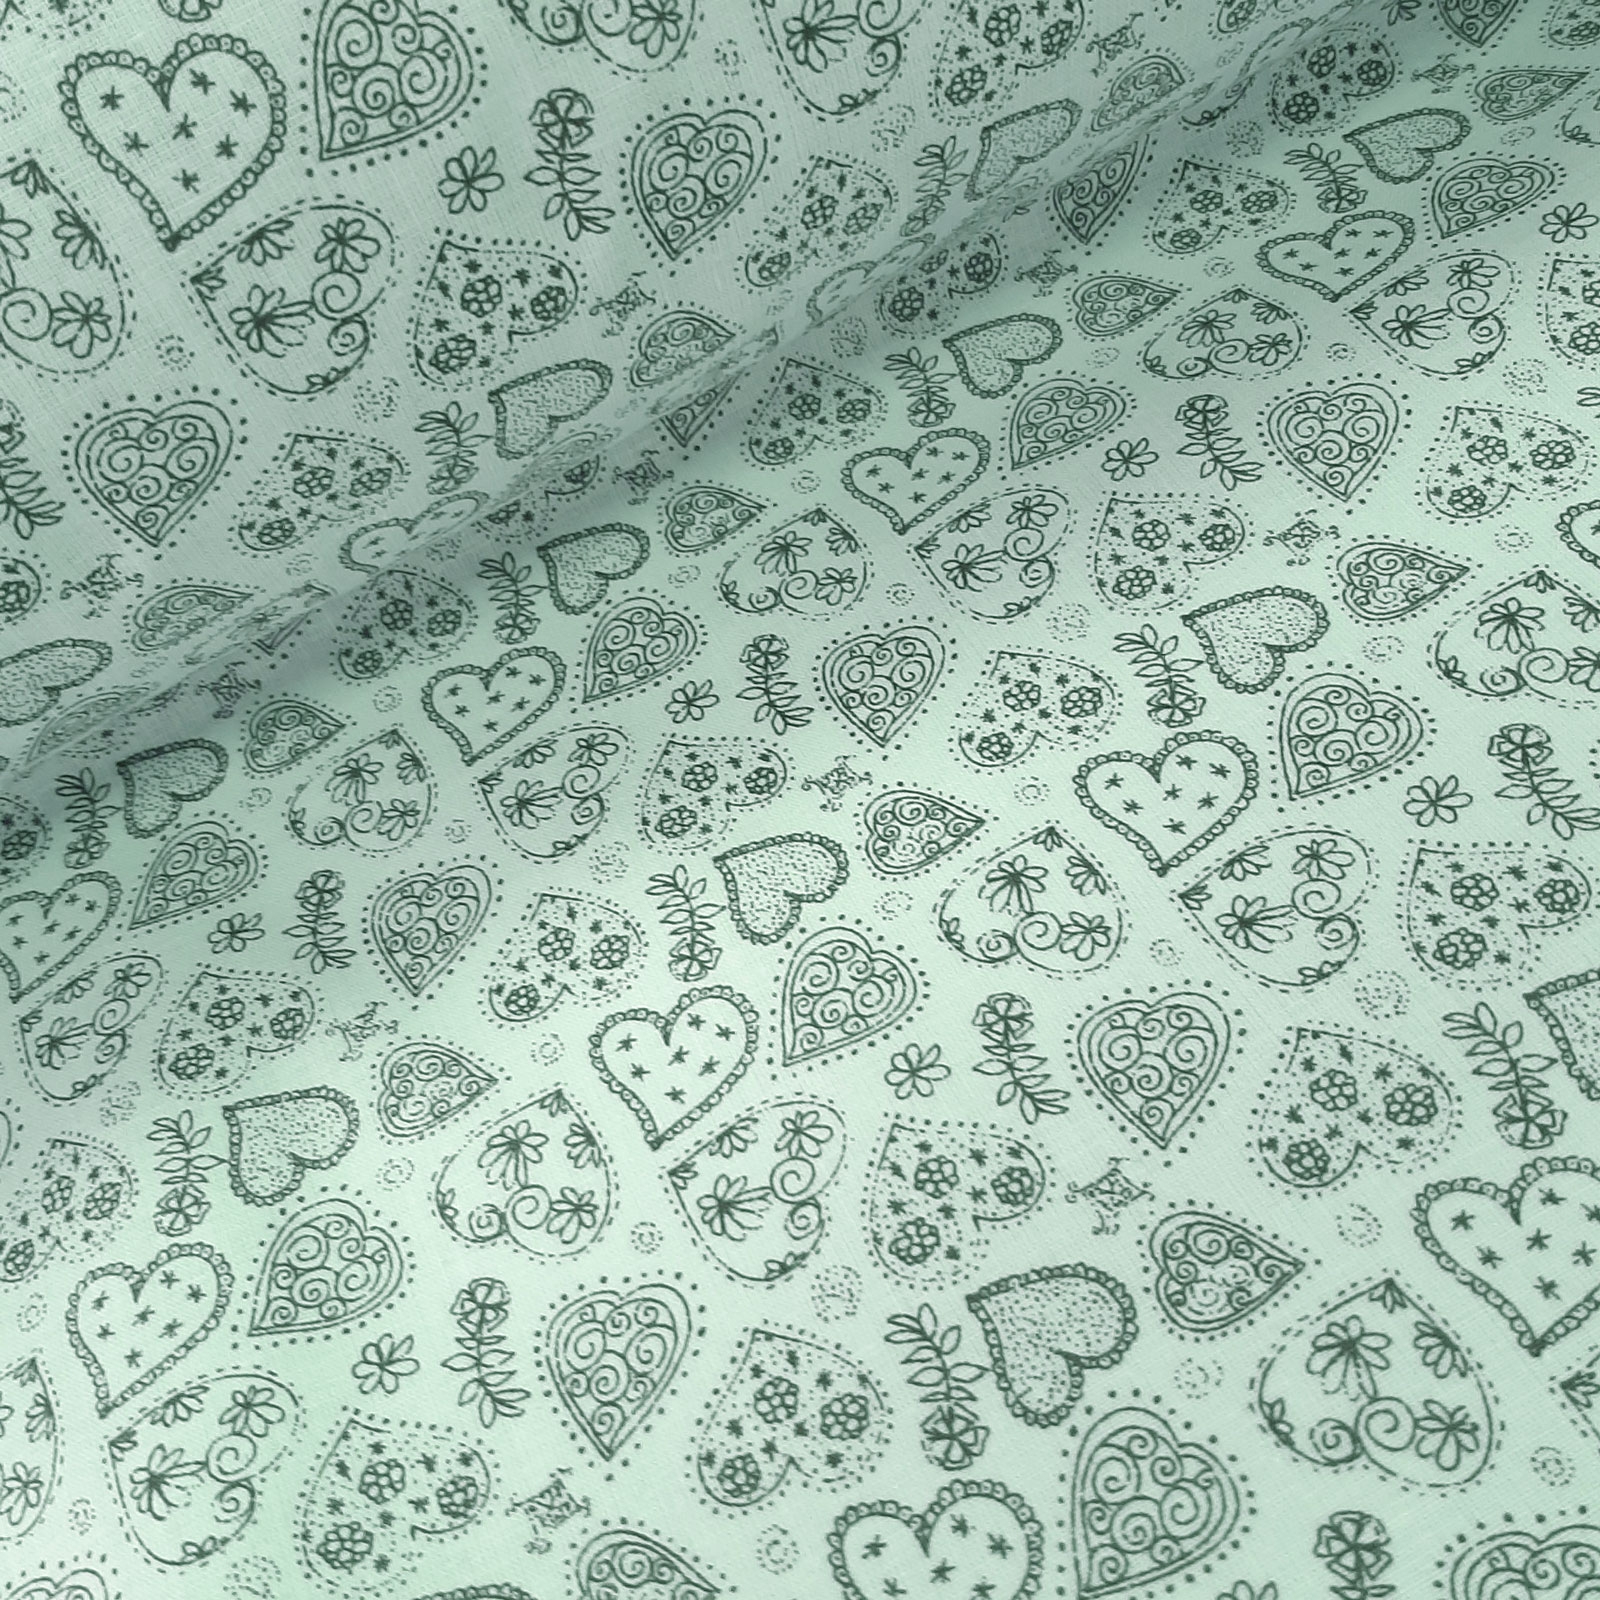 Lara with heart design - Öko Tex® cotton fabric